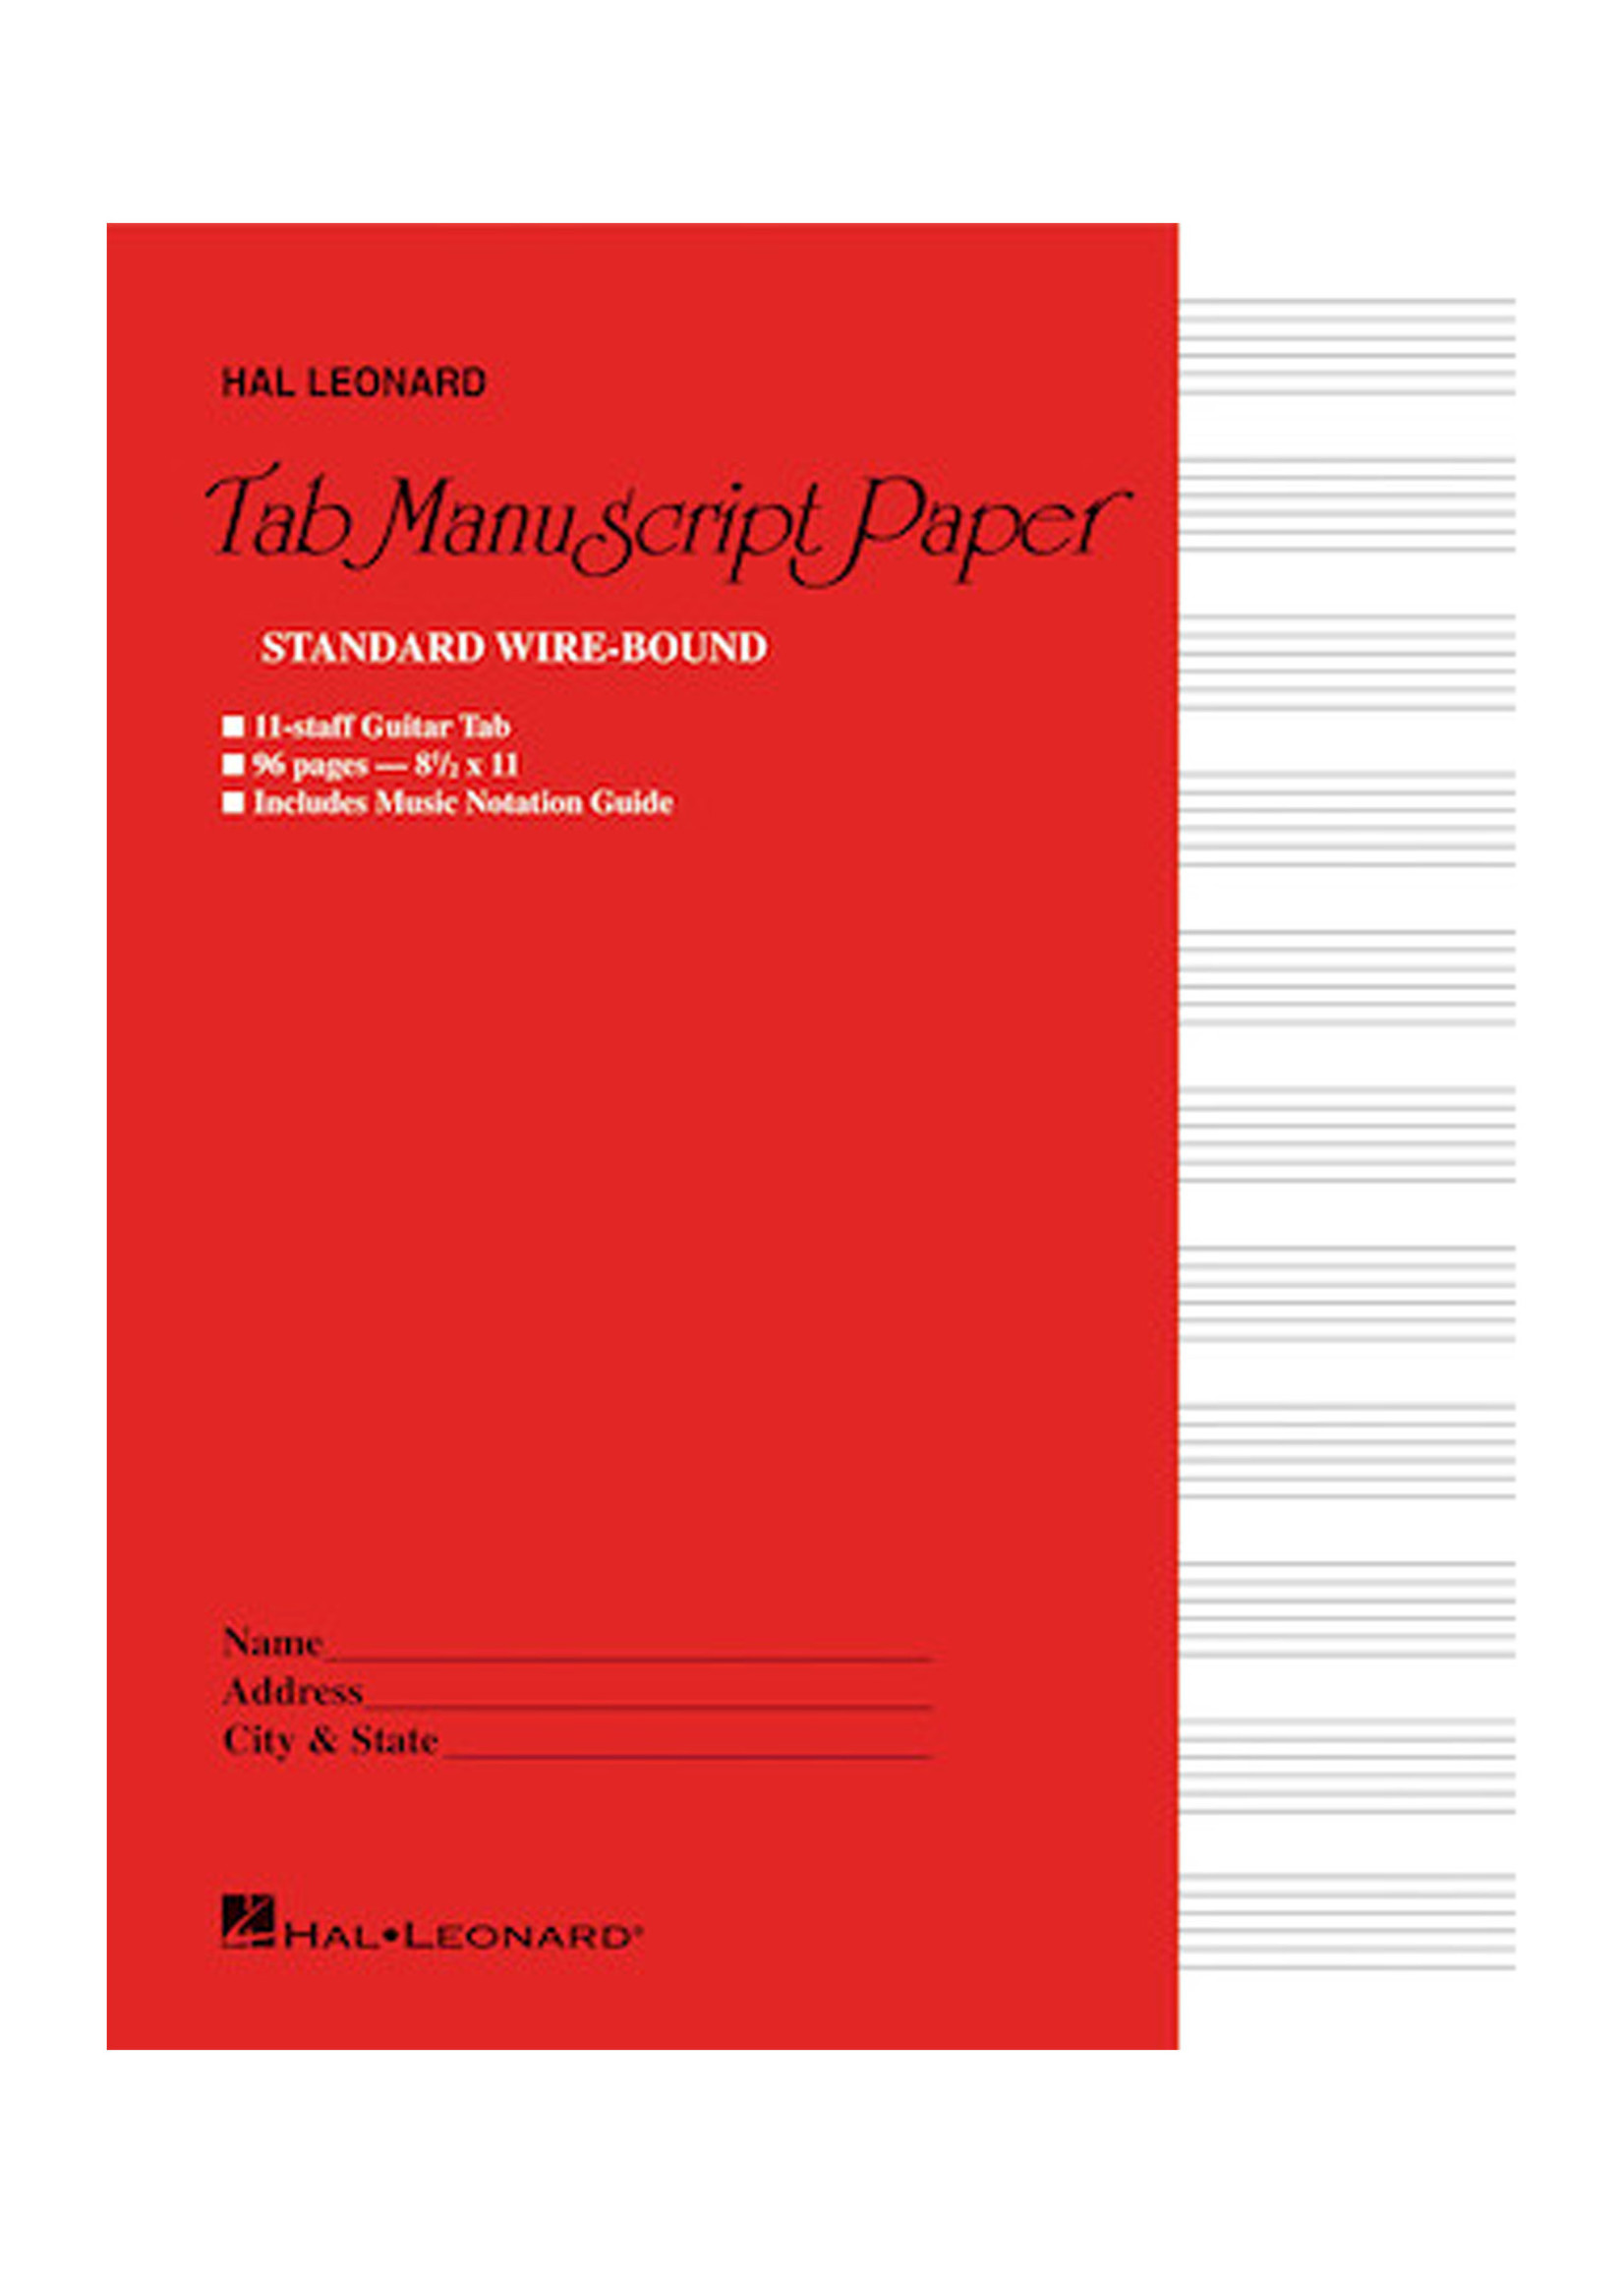 Hal Leonard Guitar Tablature Manuscript Paper Wire-Bound